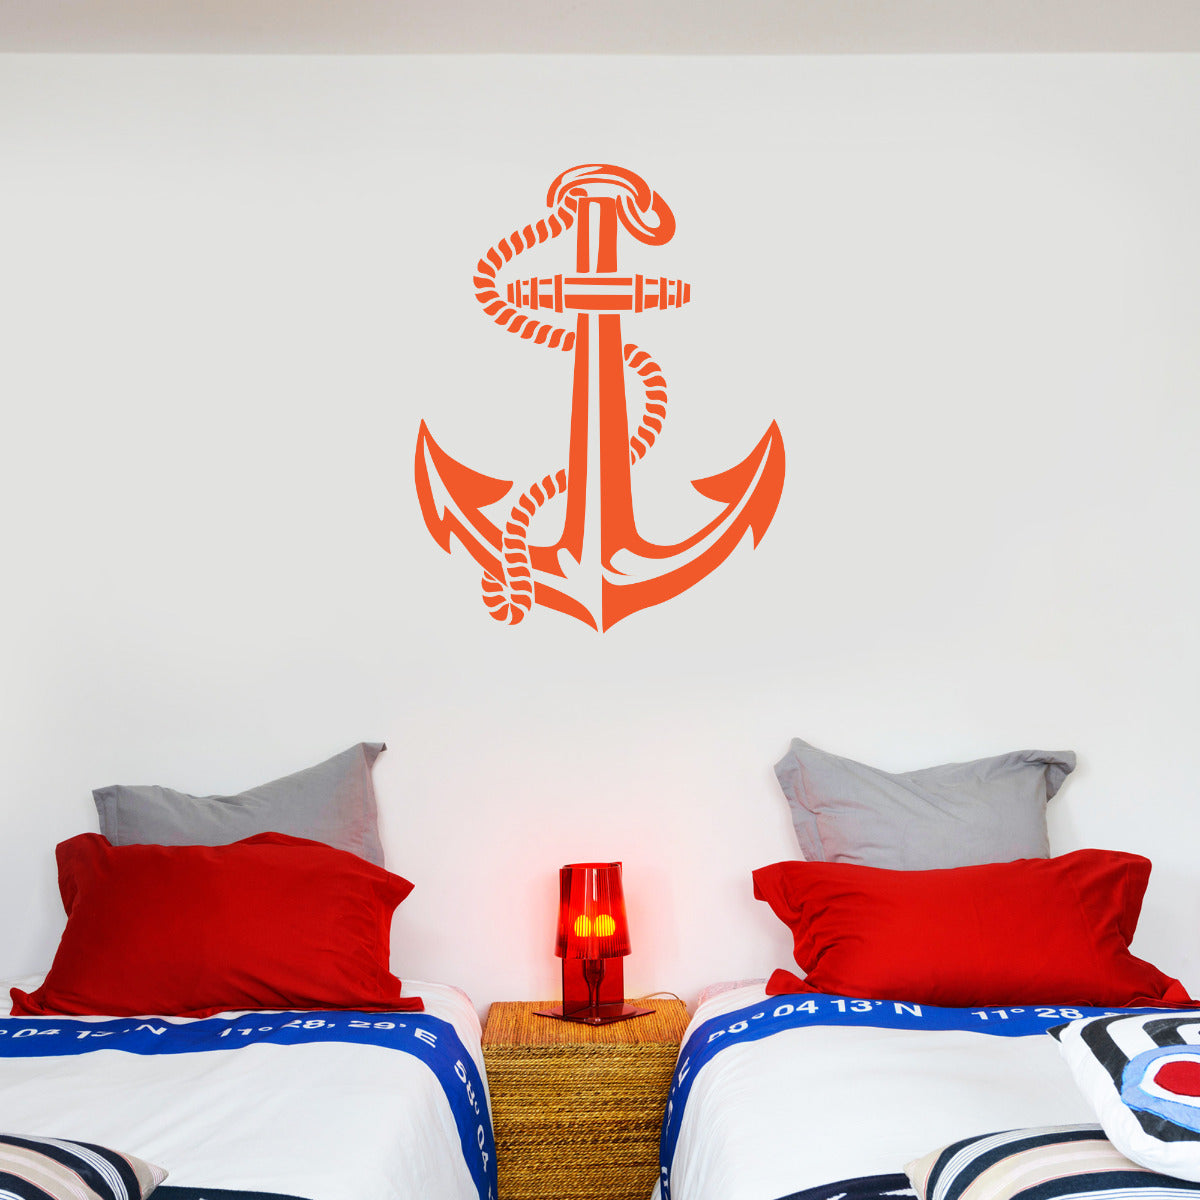 Pirate Wall Sticker Ship Anchor